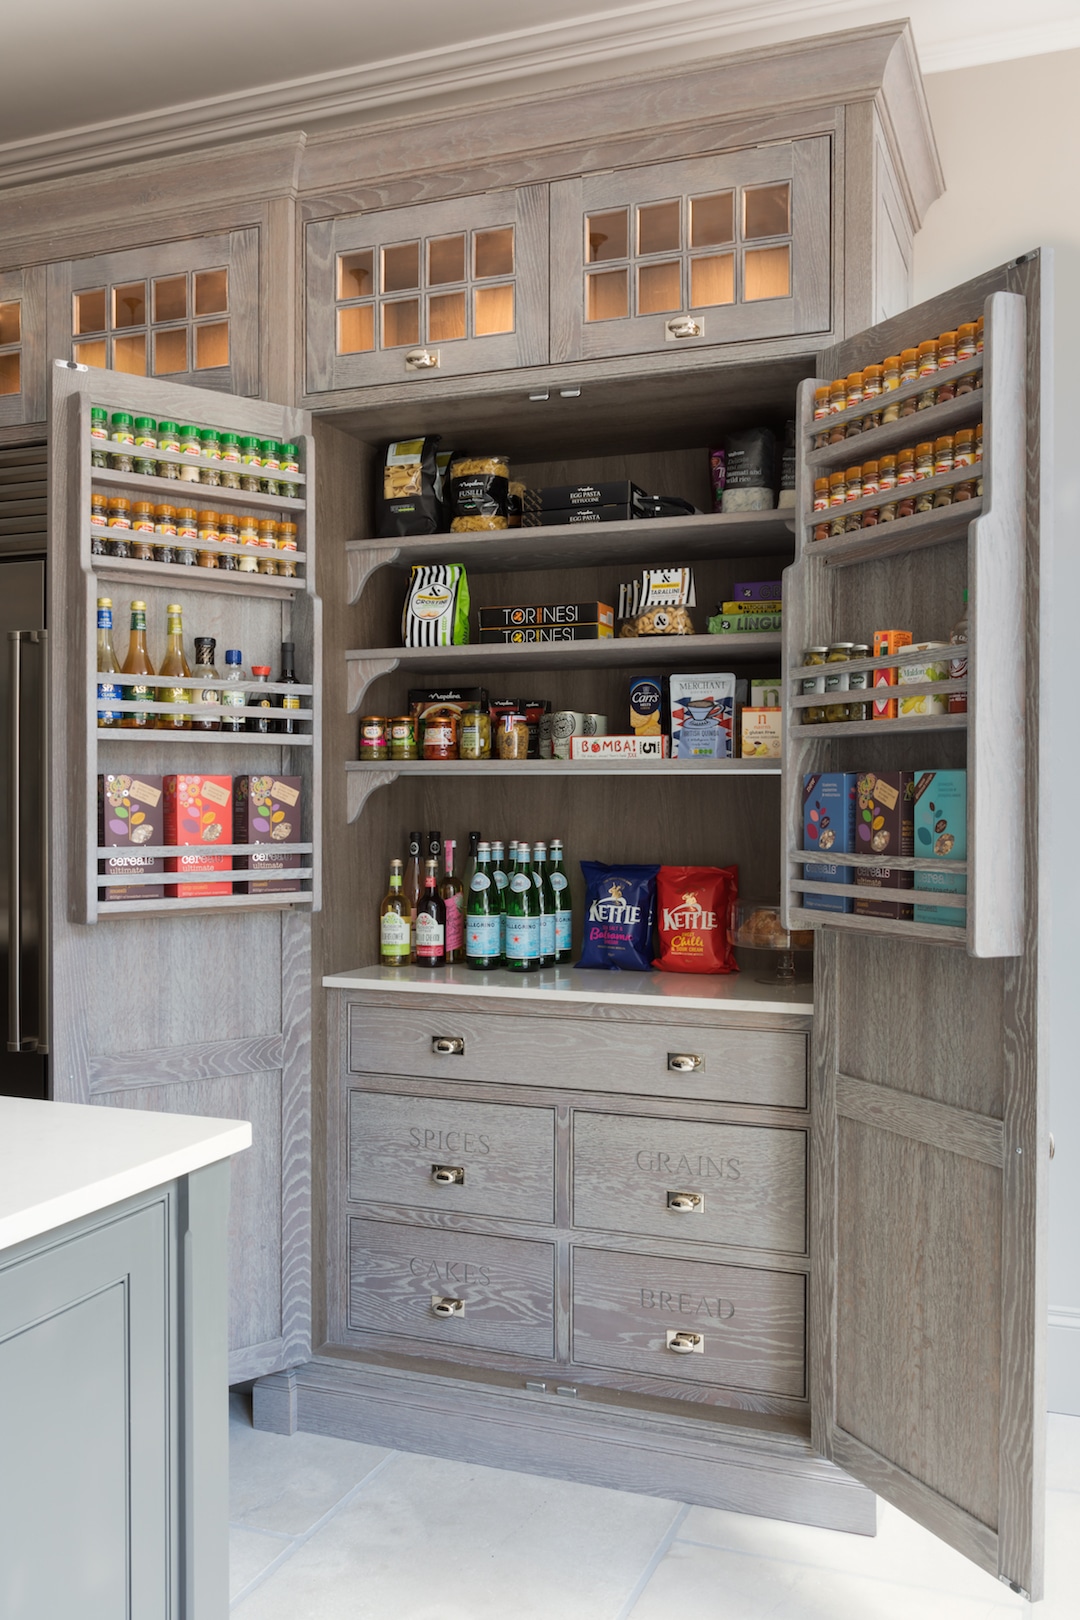 5 Most Repinned posts Humphrey Munsen Kitchen design - pantry - organization - breathtaking